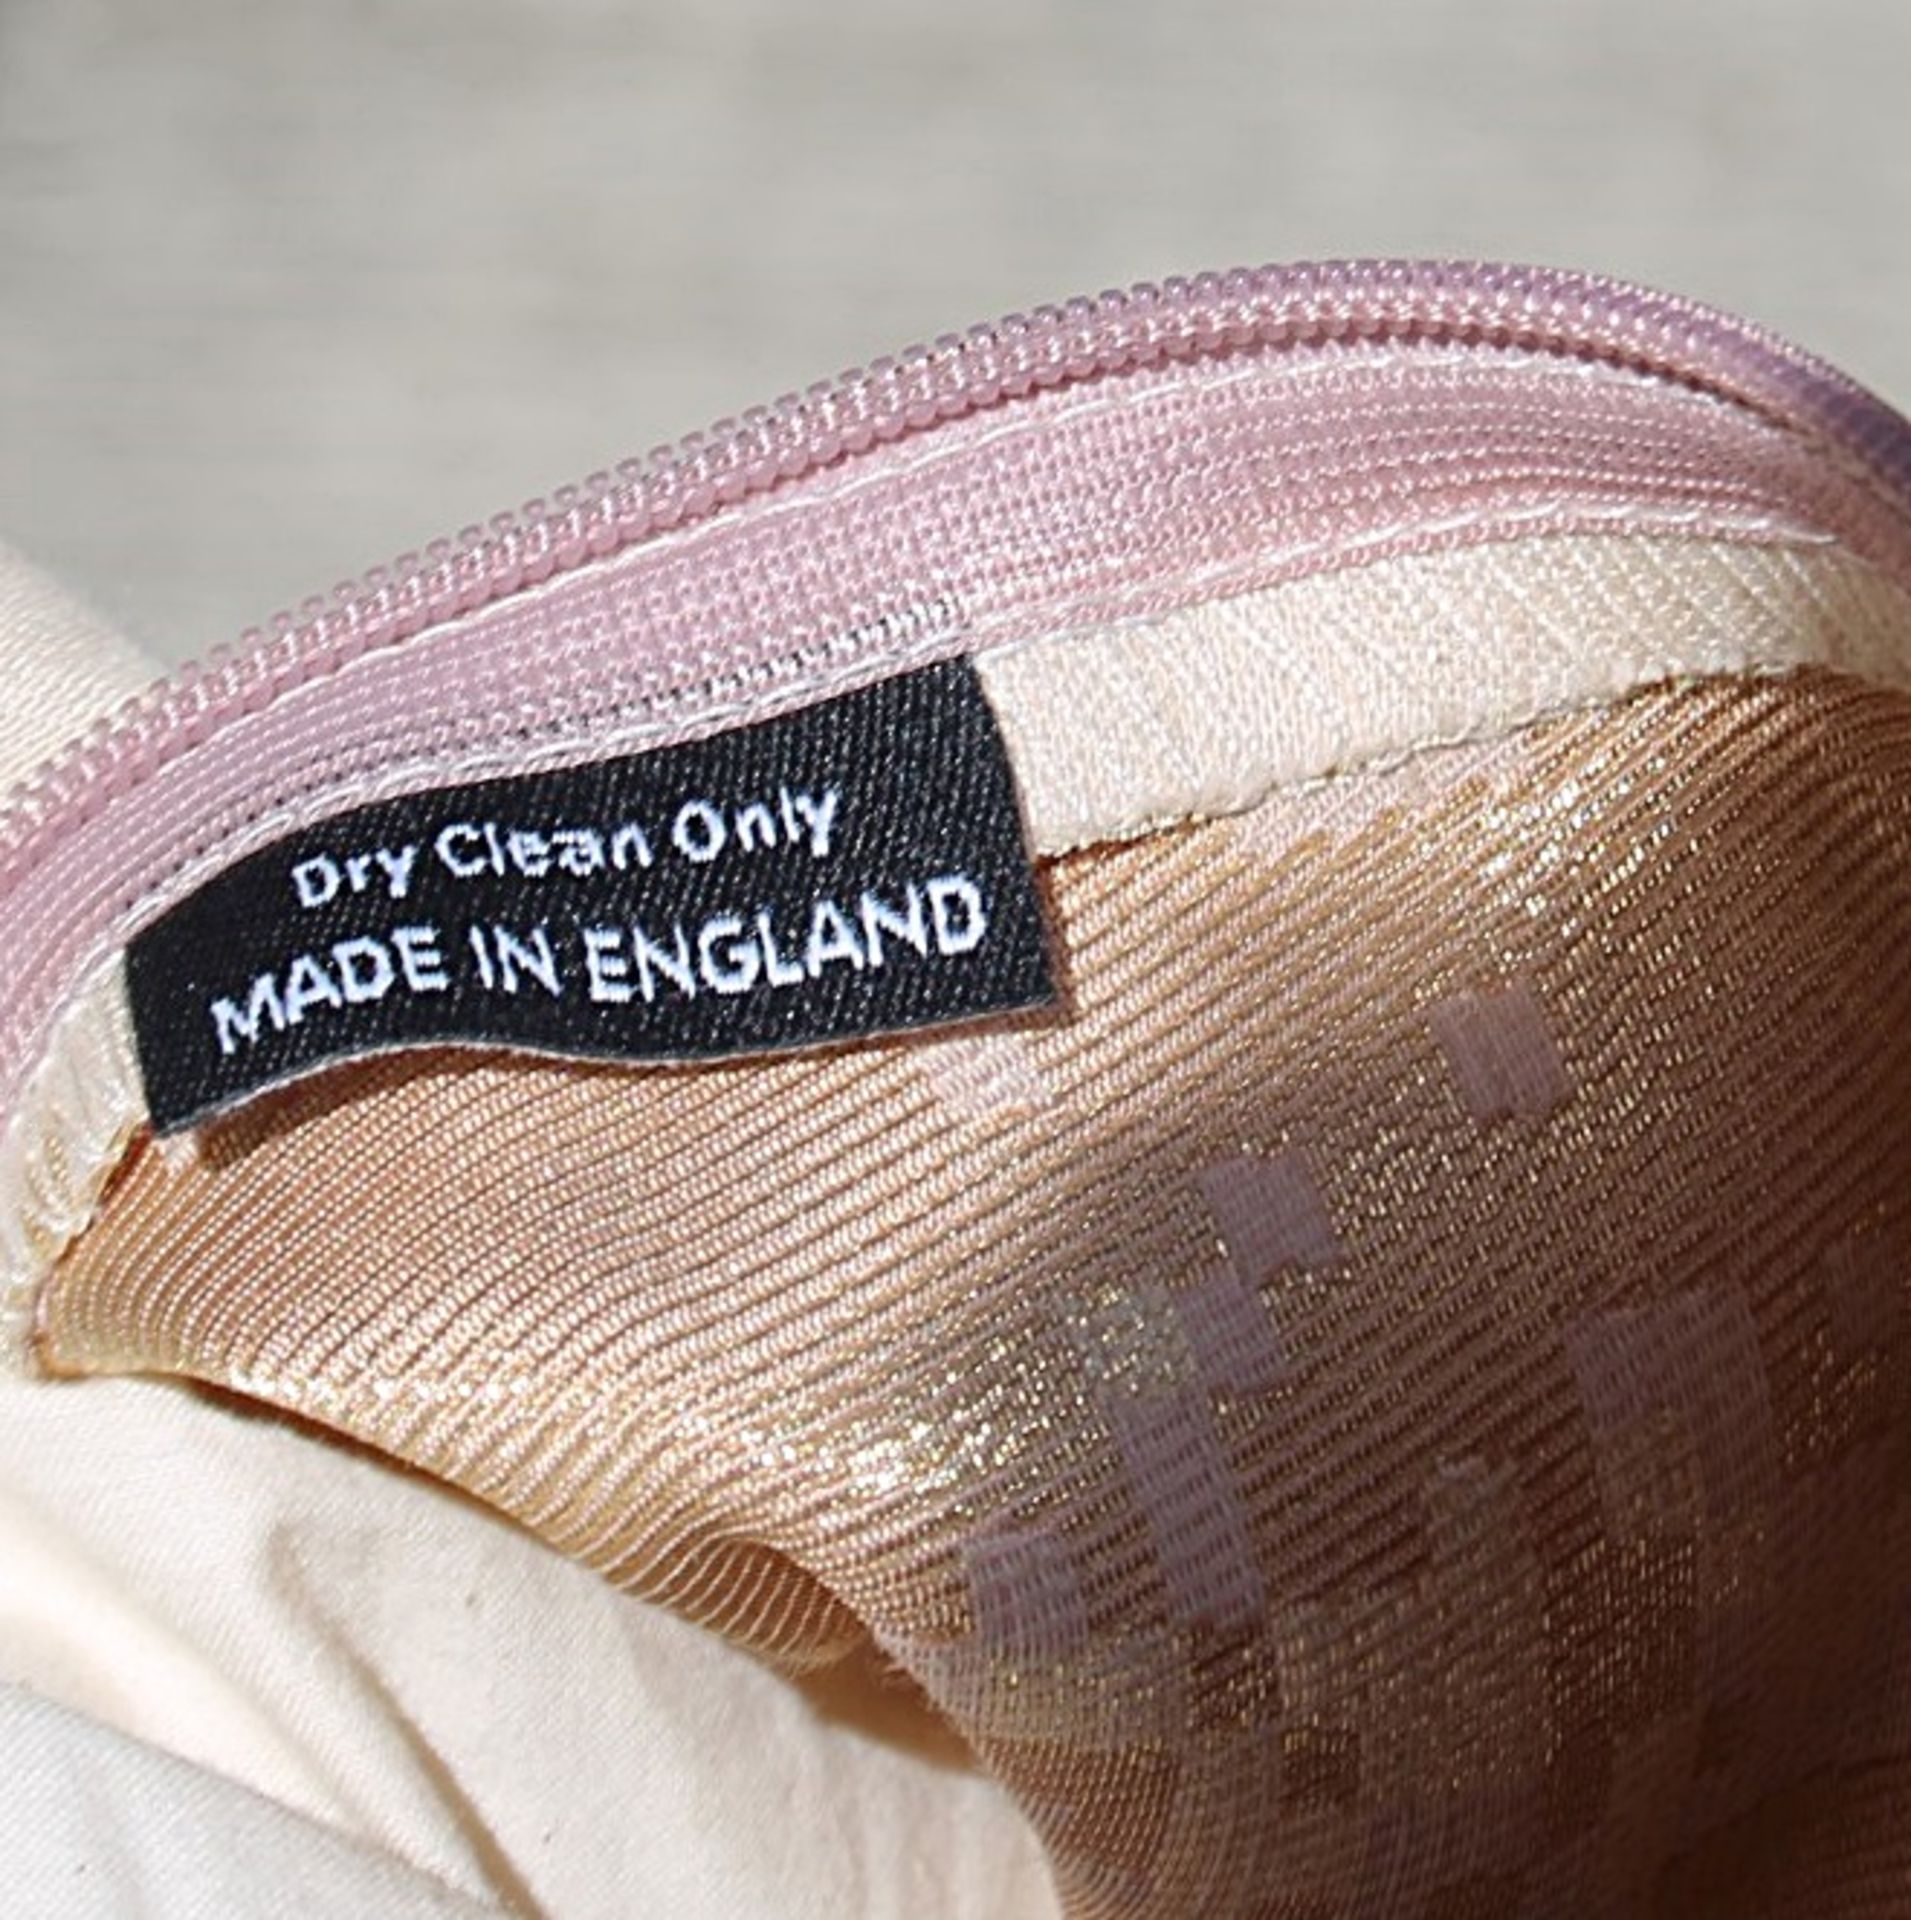 1 x BEATWOVEN 'Adage' Designer Large Weaved Silk Cushion - Original Price £295.00 - Ref: 5536778/ - Image 3 of 6